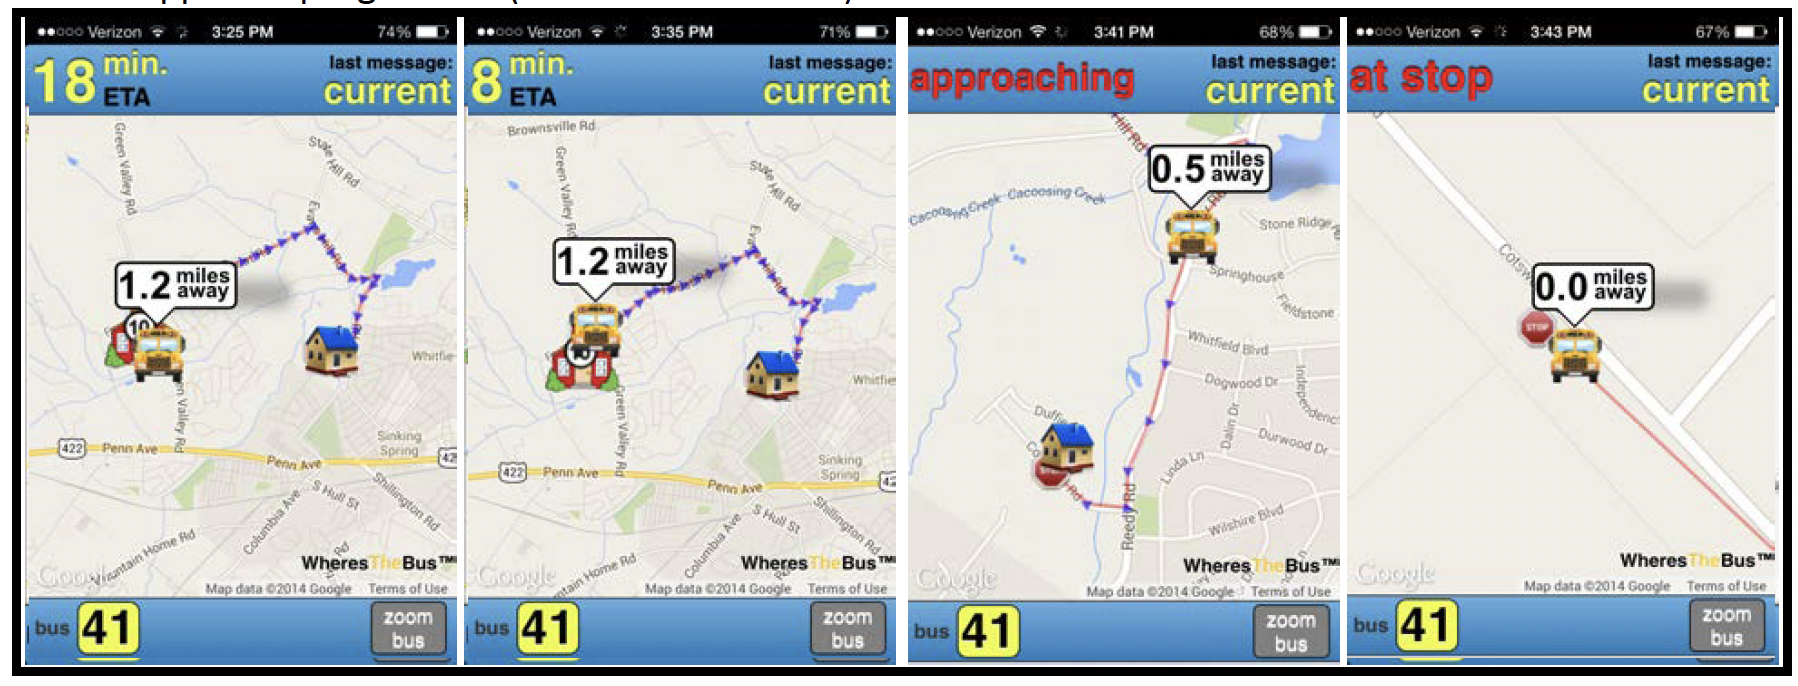 simulated screenshots of the WheresTheBus app